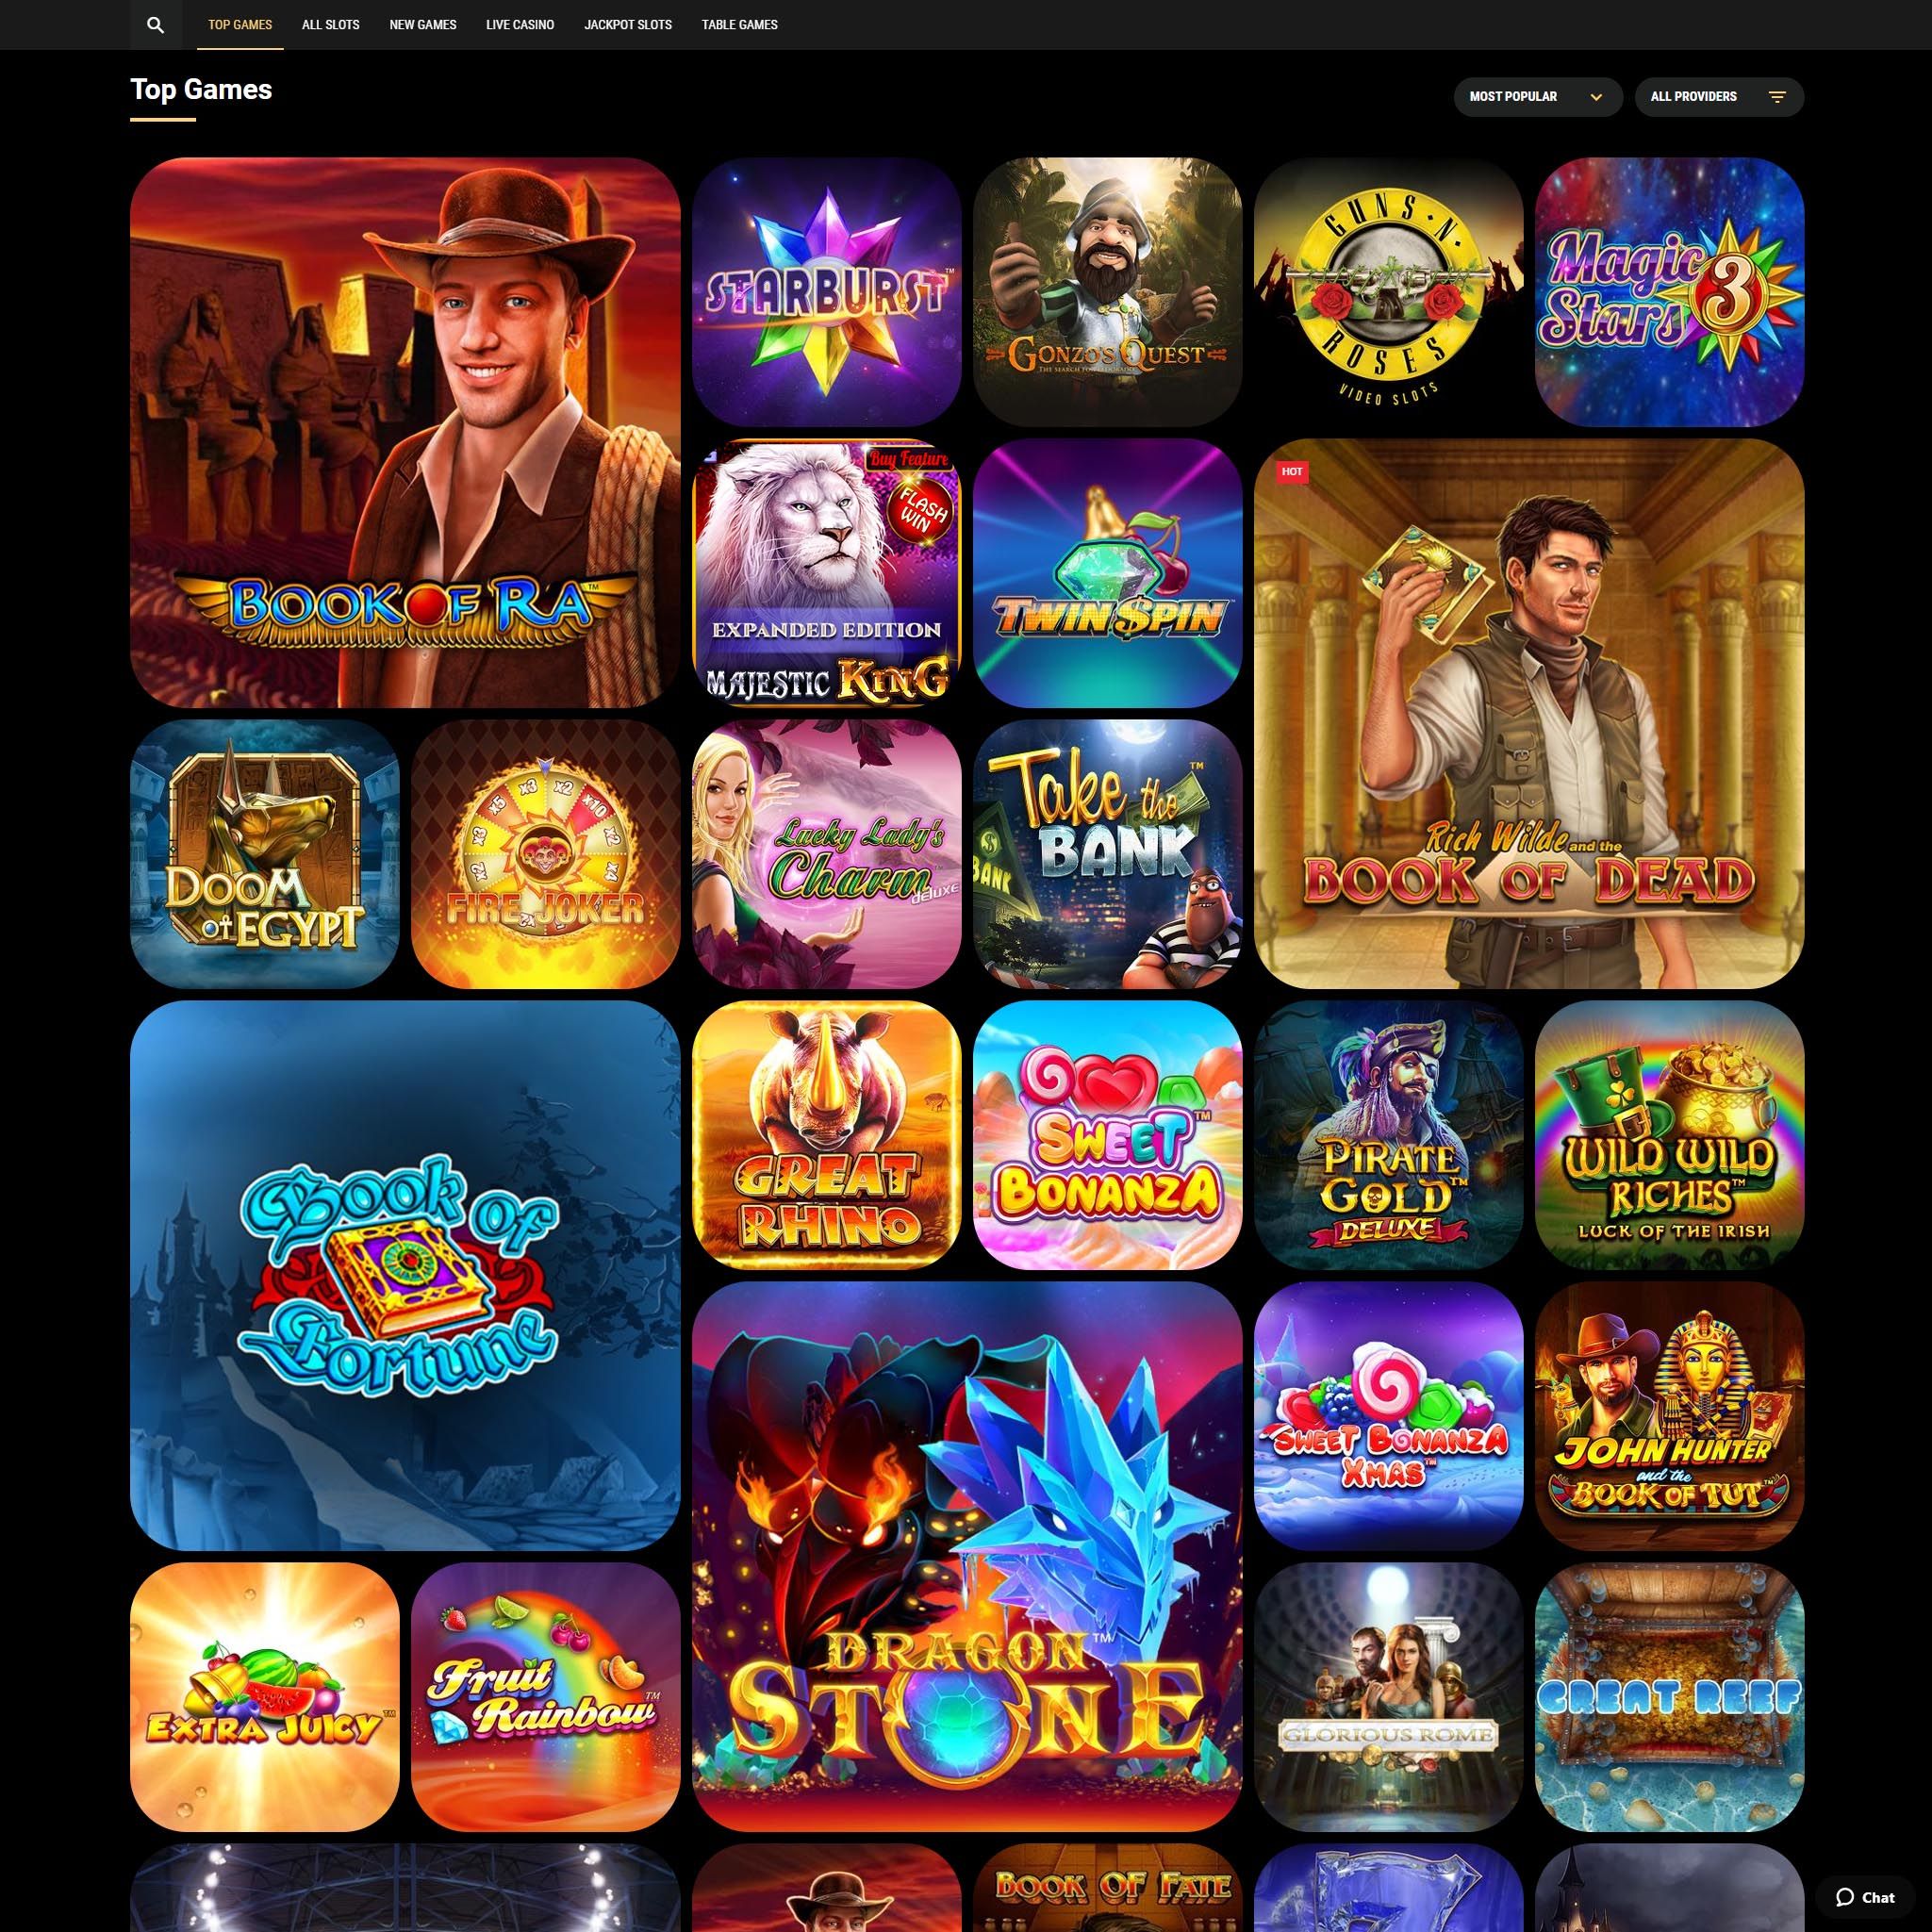 Billion Vegas Casino full games catalogue